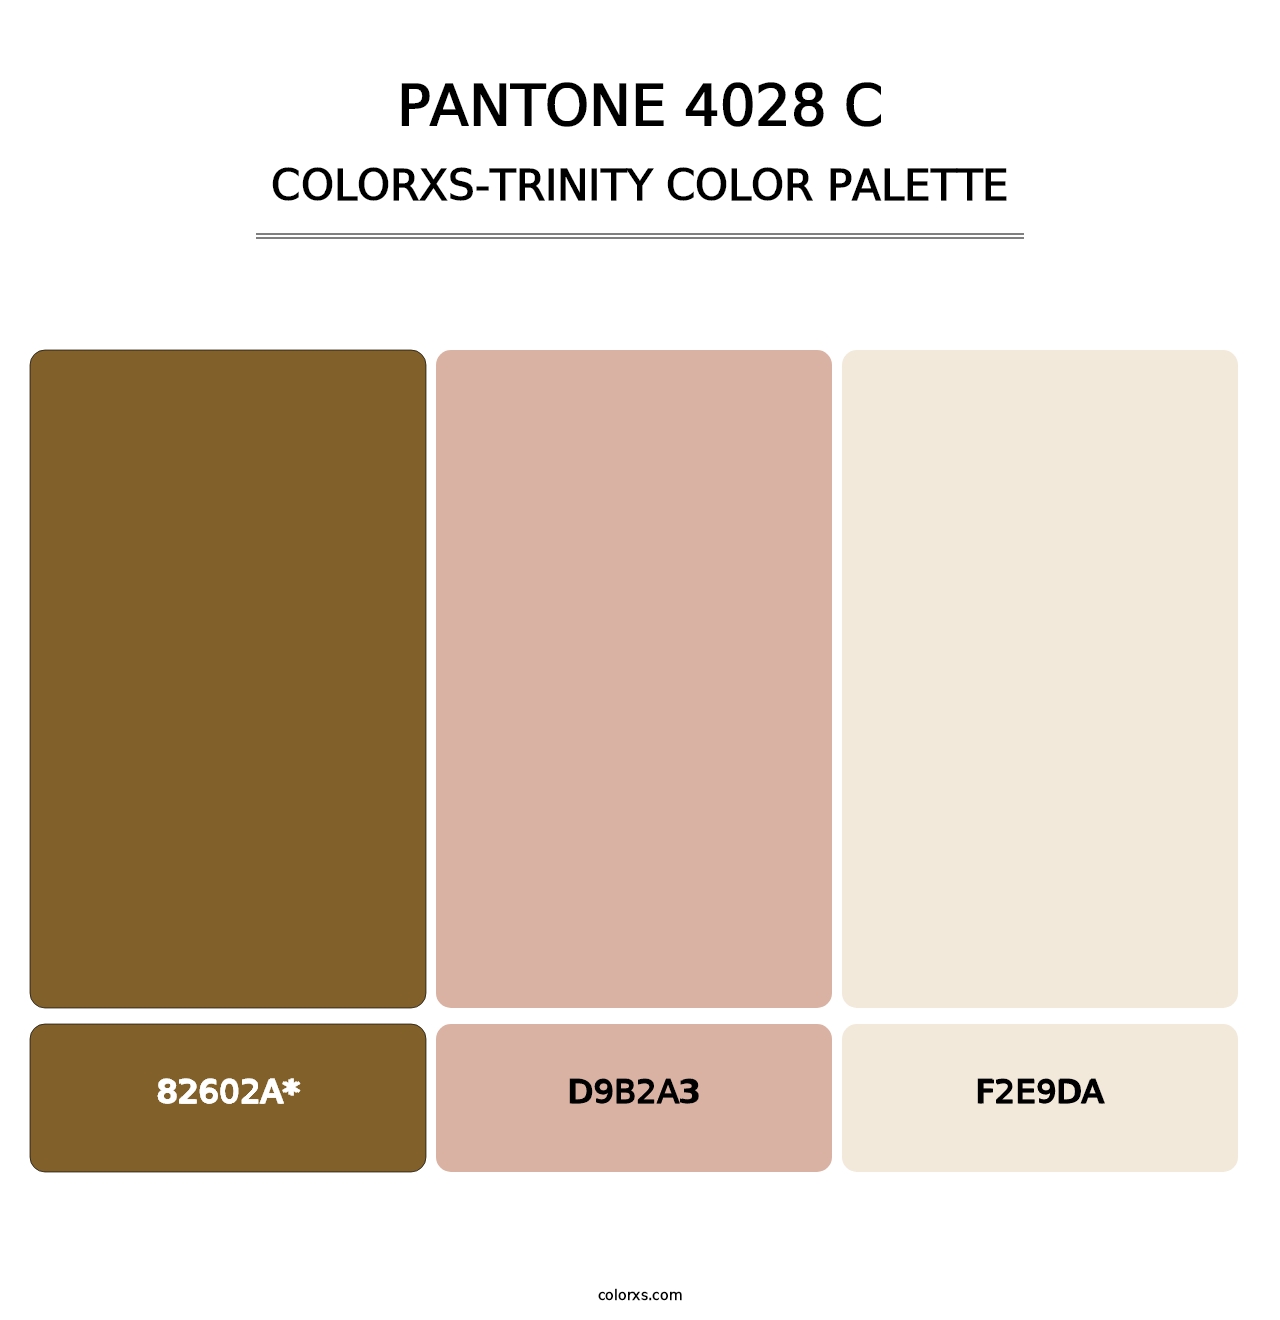 PANTONE 4028 C - Colorxs Trinity Palette